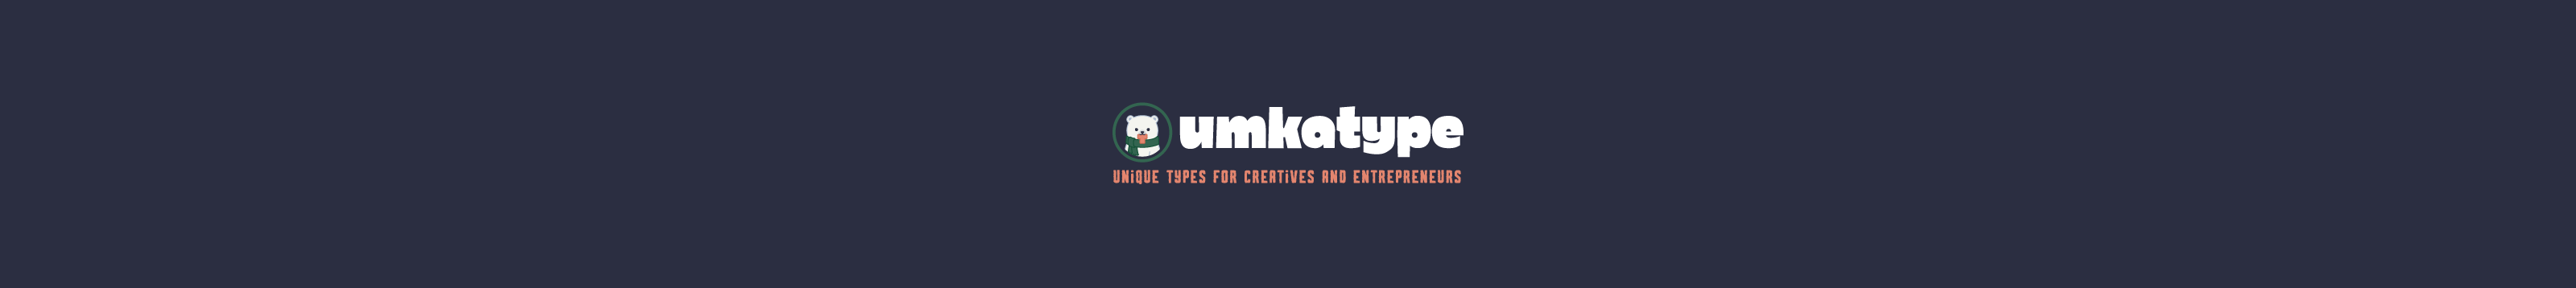 Umka Type's profile banner